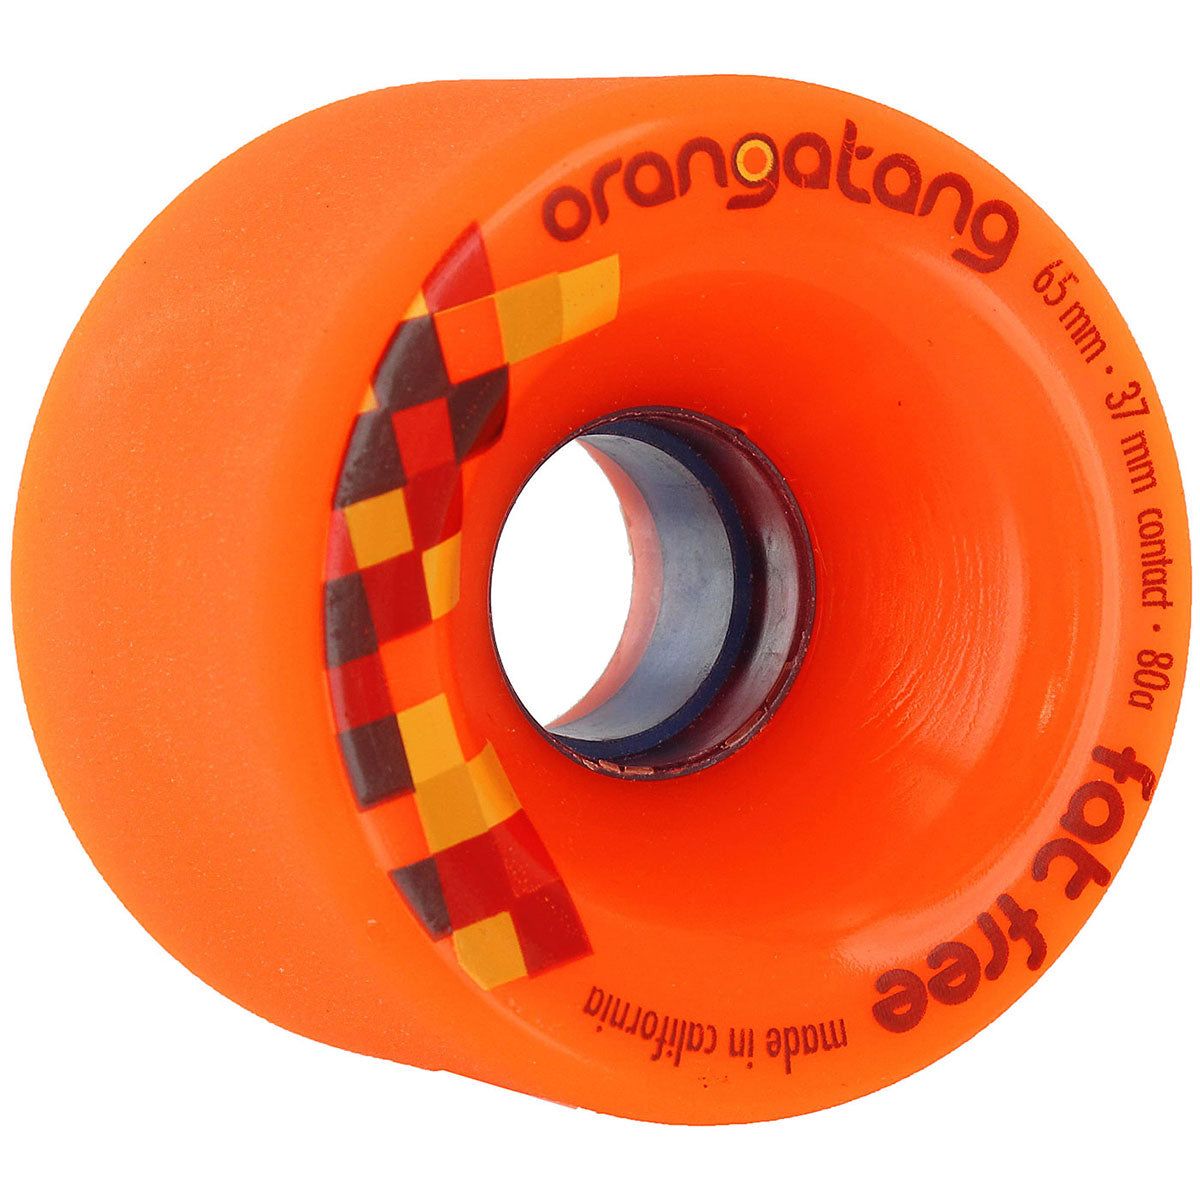 Orangatang Fat Free Freeride 80a Longboard Wheels - Orange - 65mm image 1